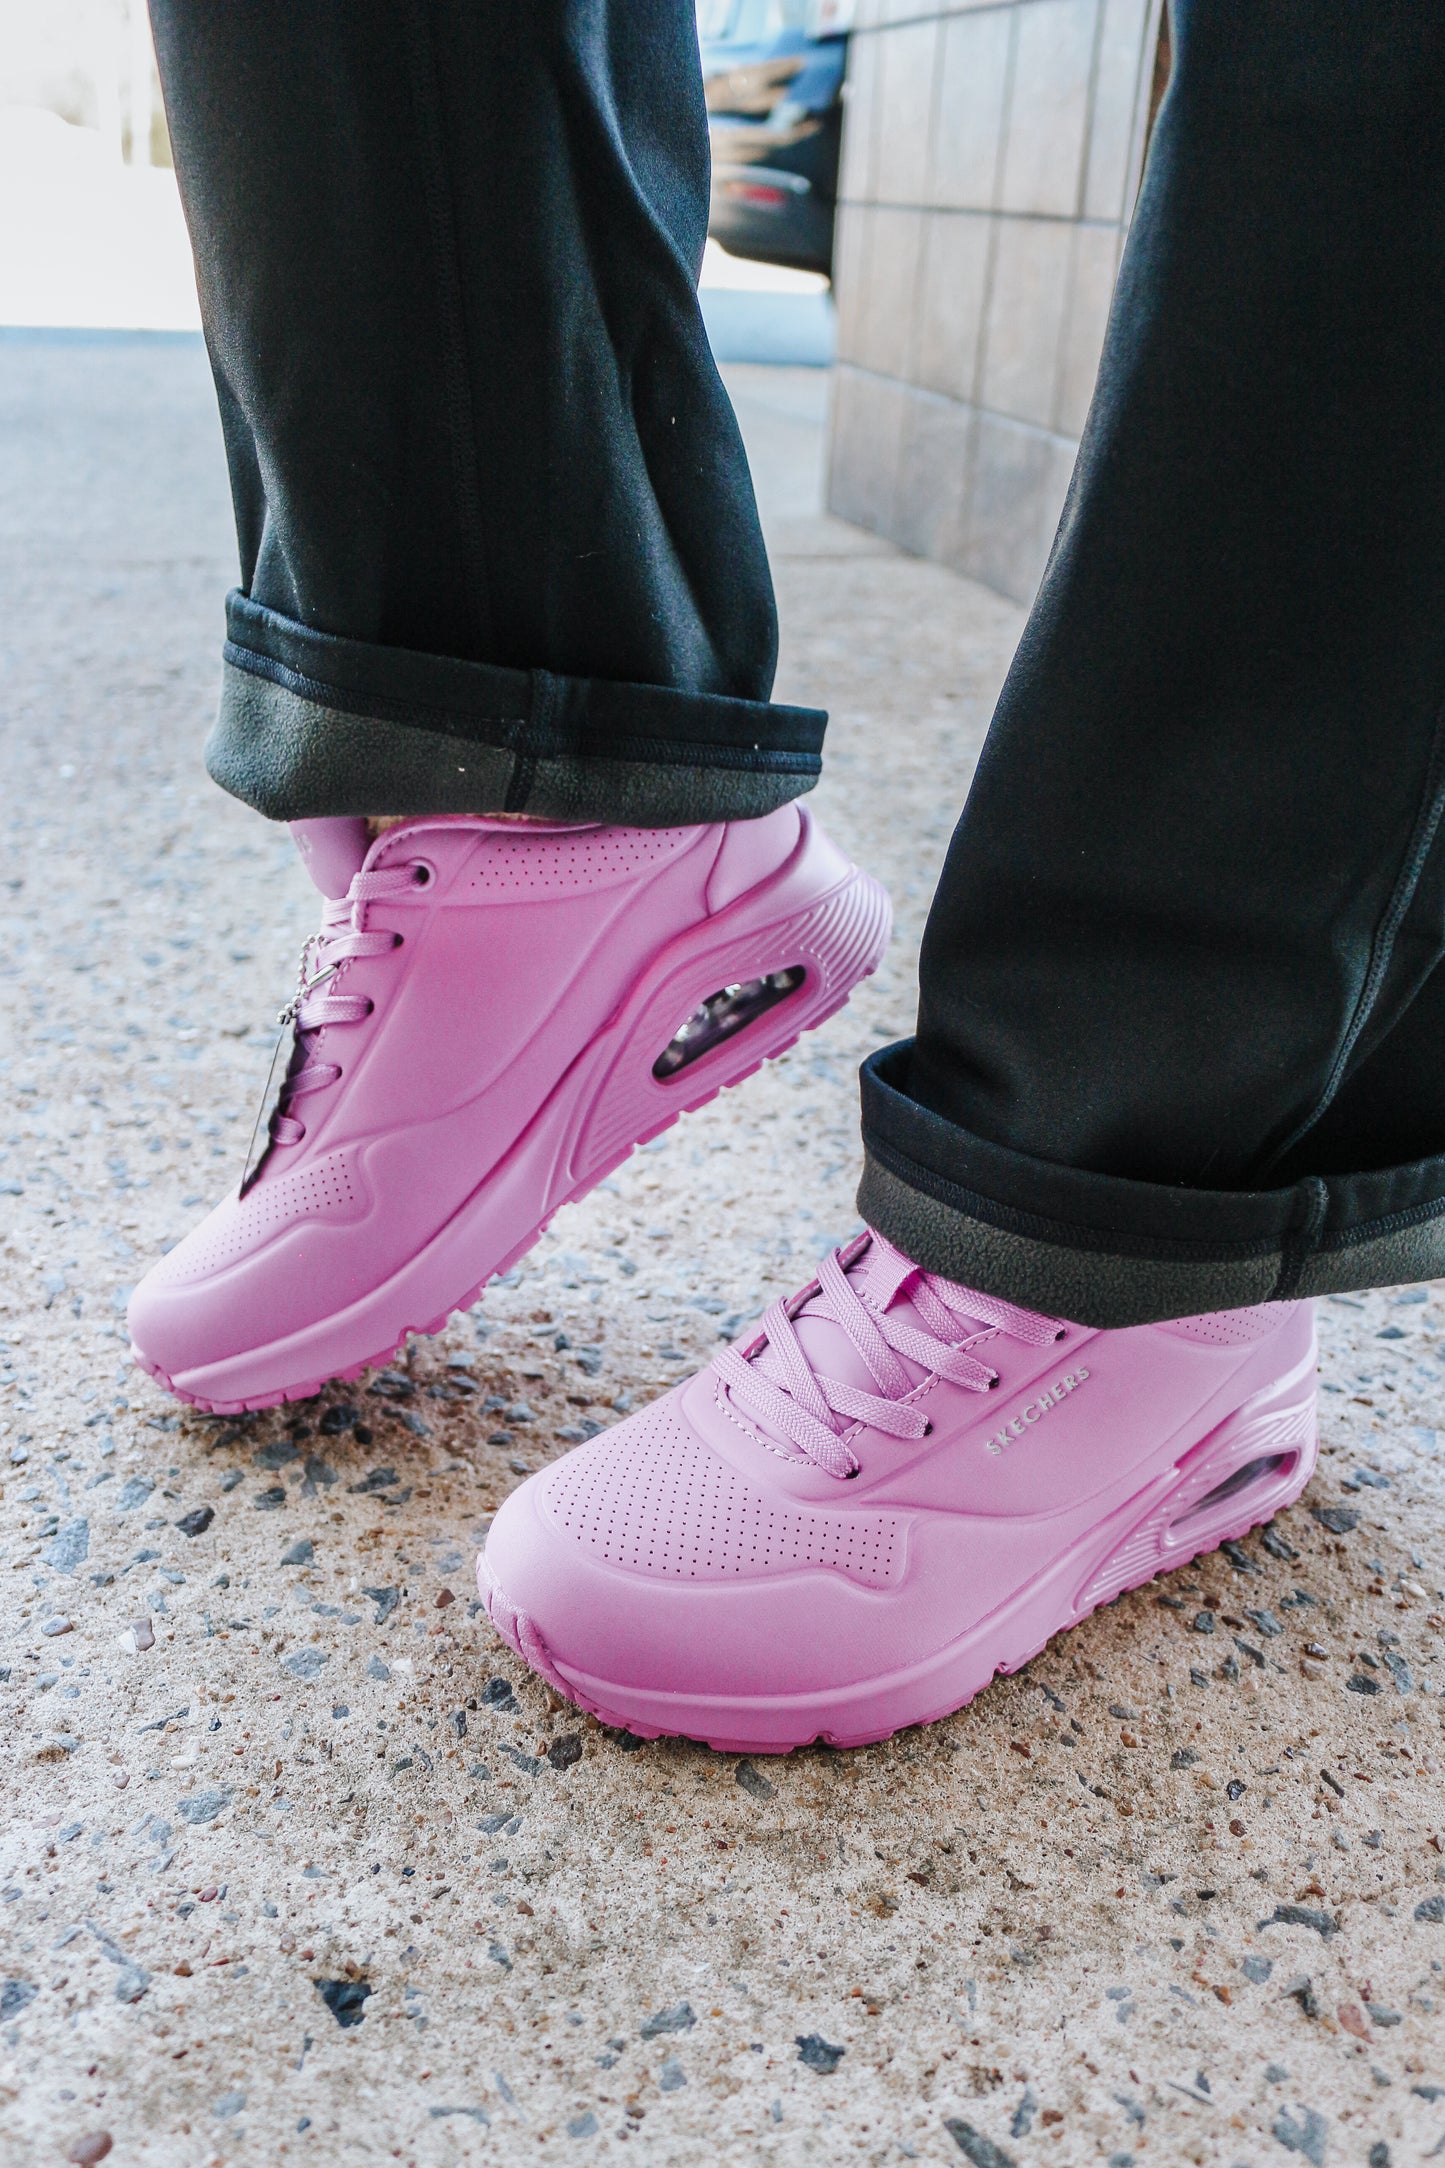 Pink Uno Air Skechers Tennis Shoes